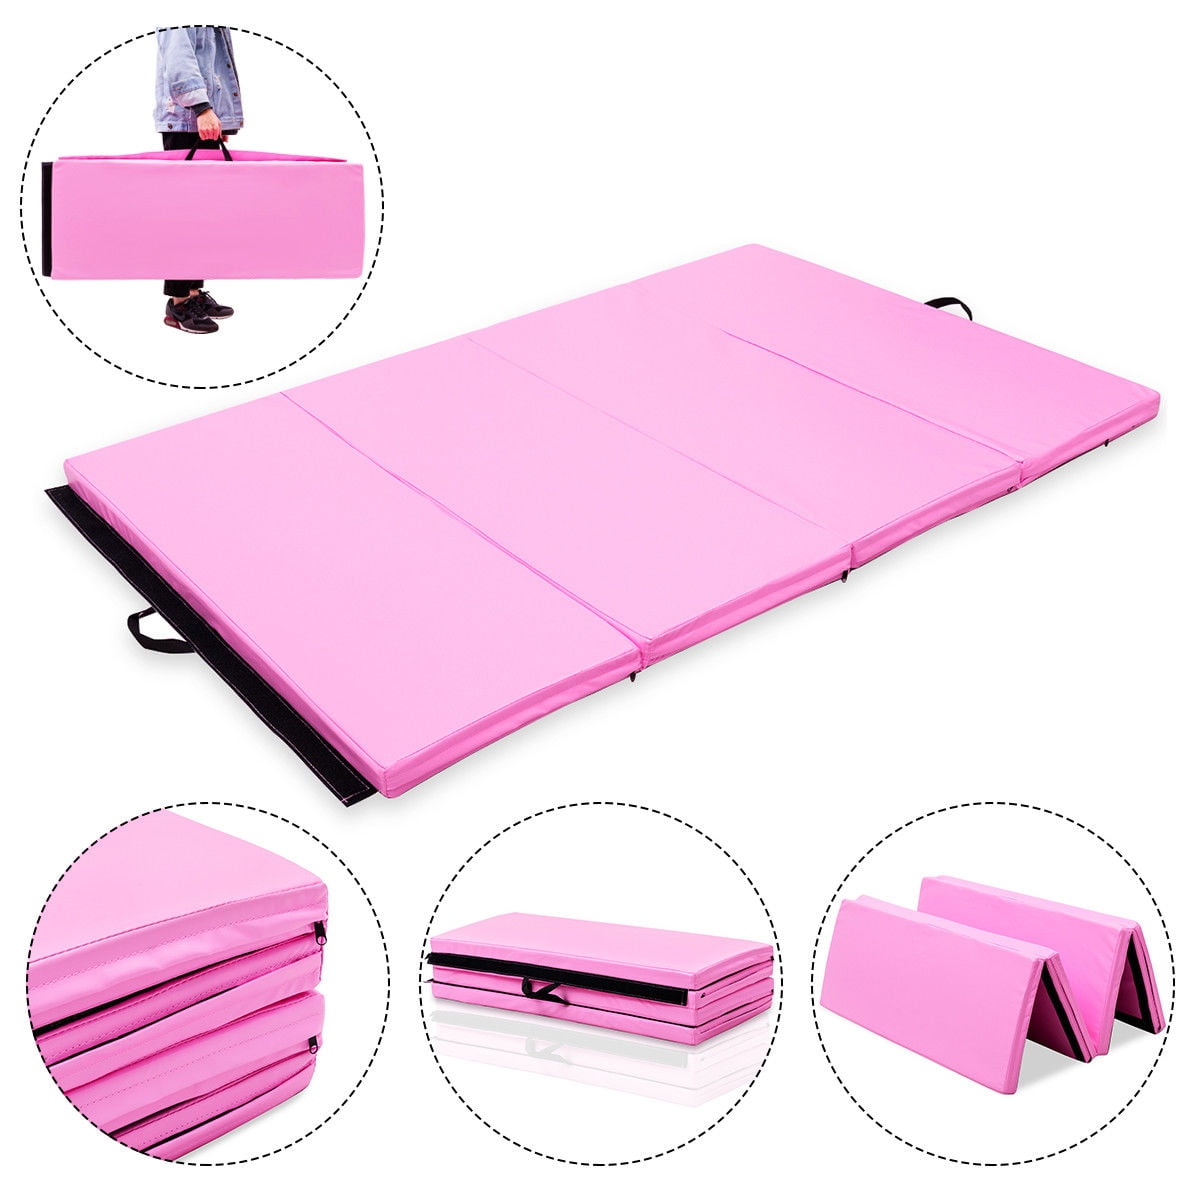 Multi-Use Portable Dance/Yoga Mat 4.5-inch EPE Foam Pink / Black FitMat 5 Ft 